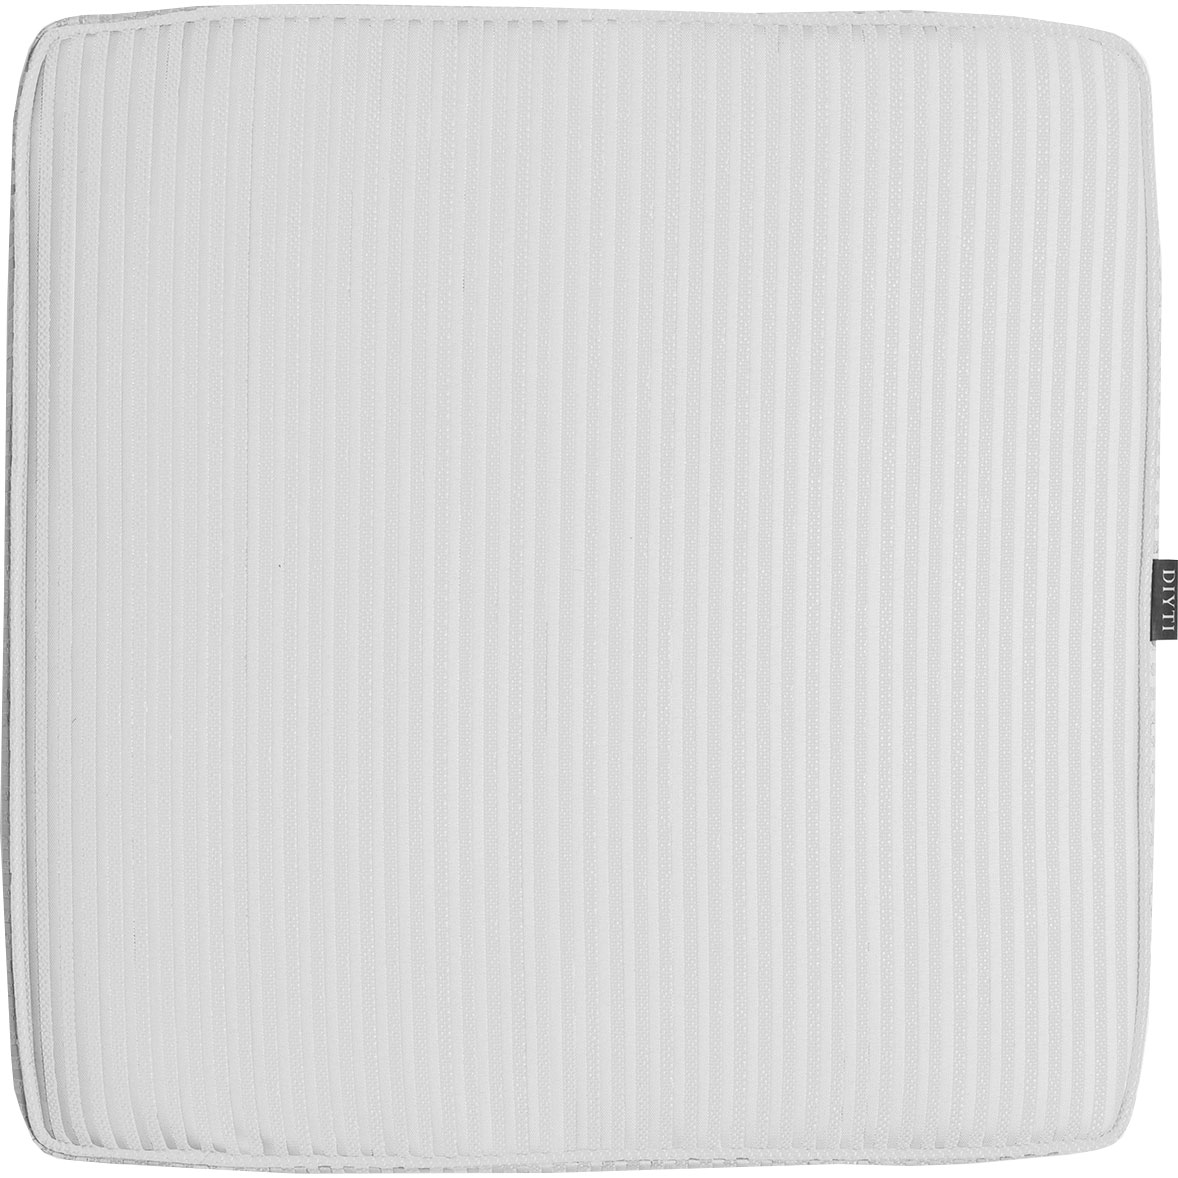 Narrow Stripe Cushion 45x45 cm, White